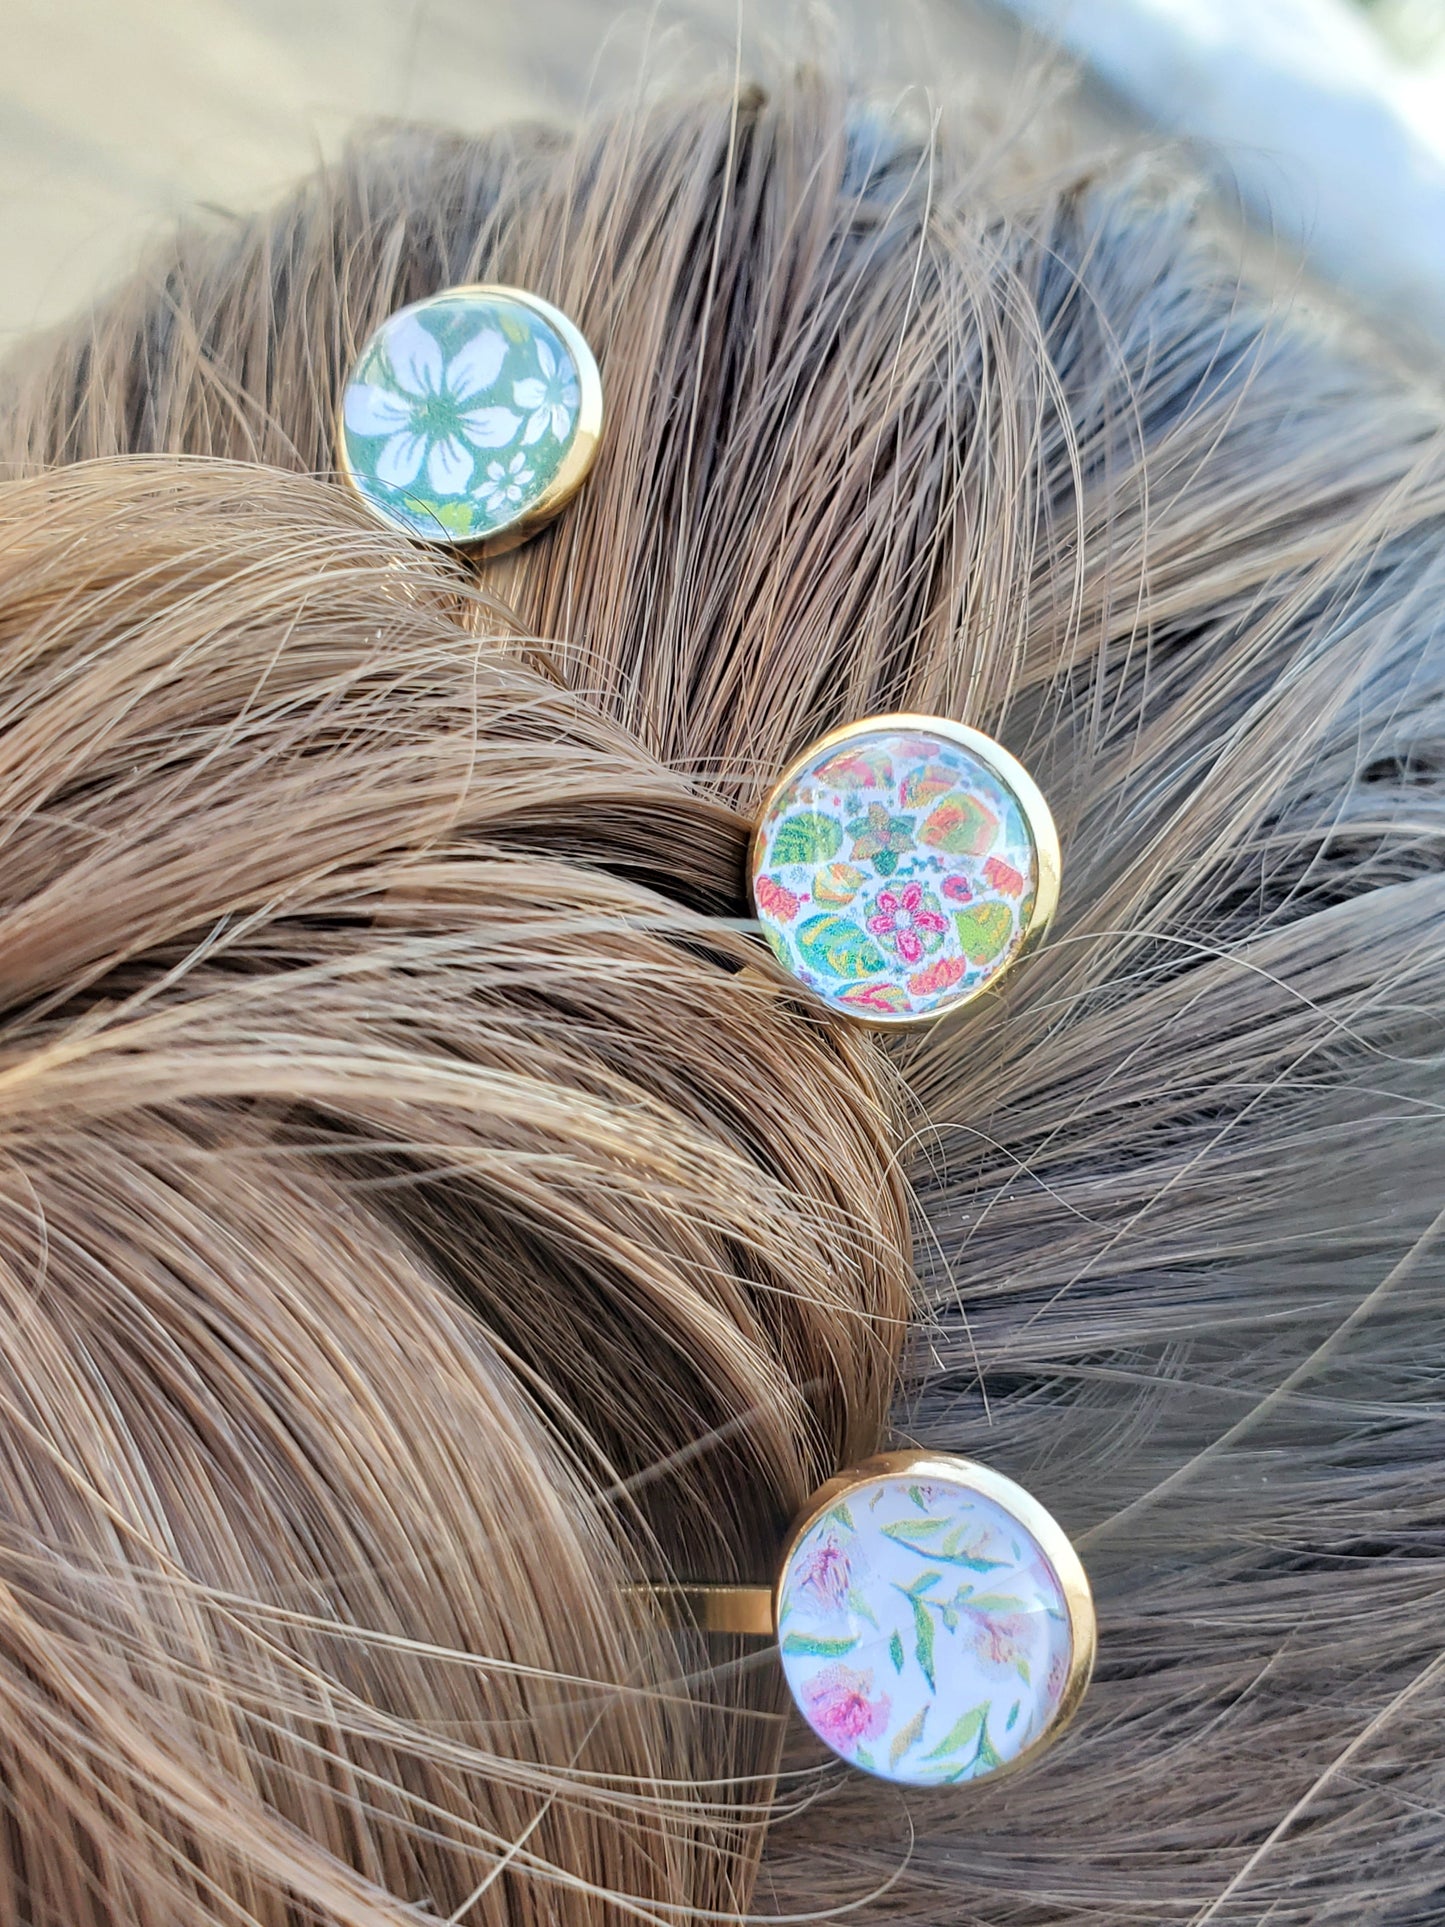 Hair Pins - Floral Pocket Full of Sunshine (Set of 3)